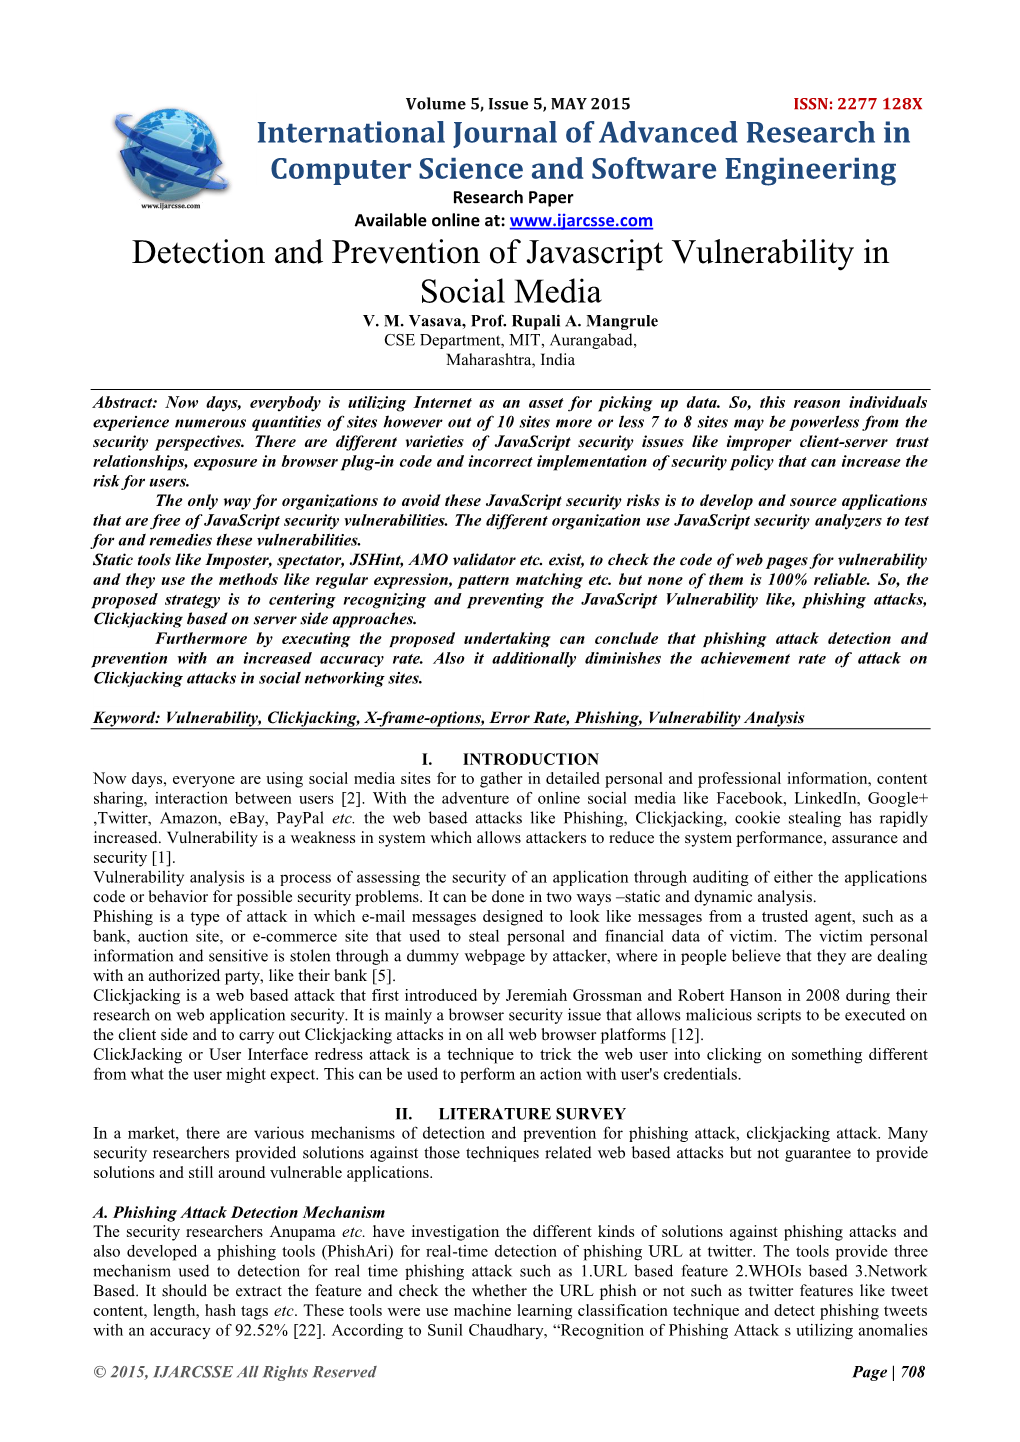 Detection and Prevention of Javascript Vulnerability in Social Media V